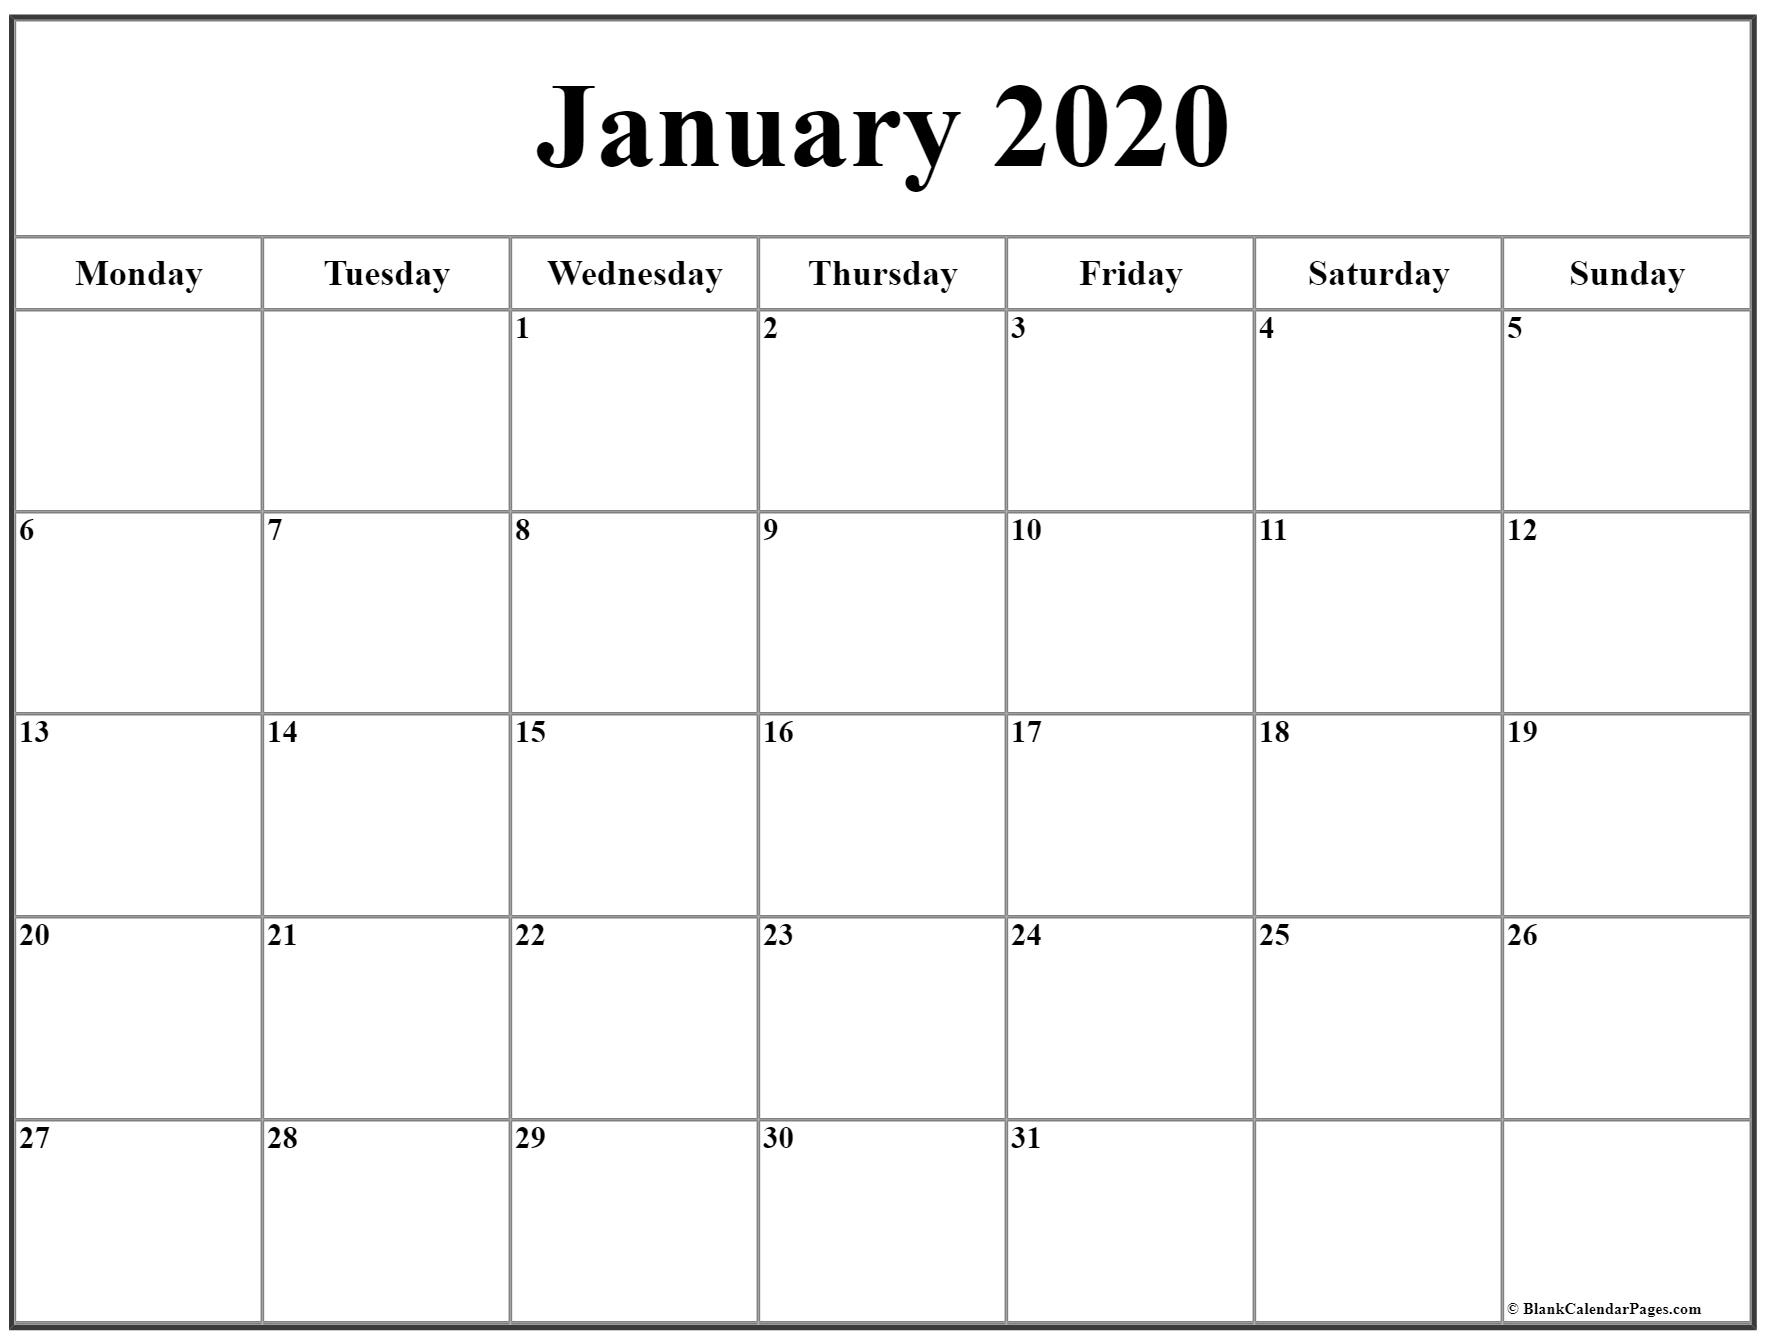 January 2020 Monday Calendar | Monday To Sunday pertaining to Monday Thru Friday Calendar 2020 Printable